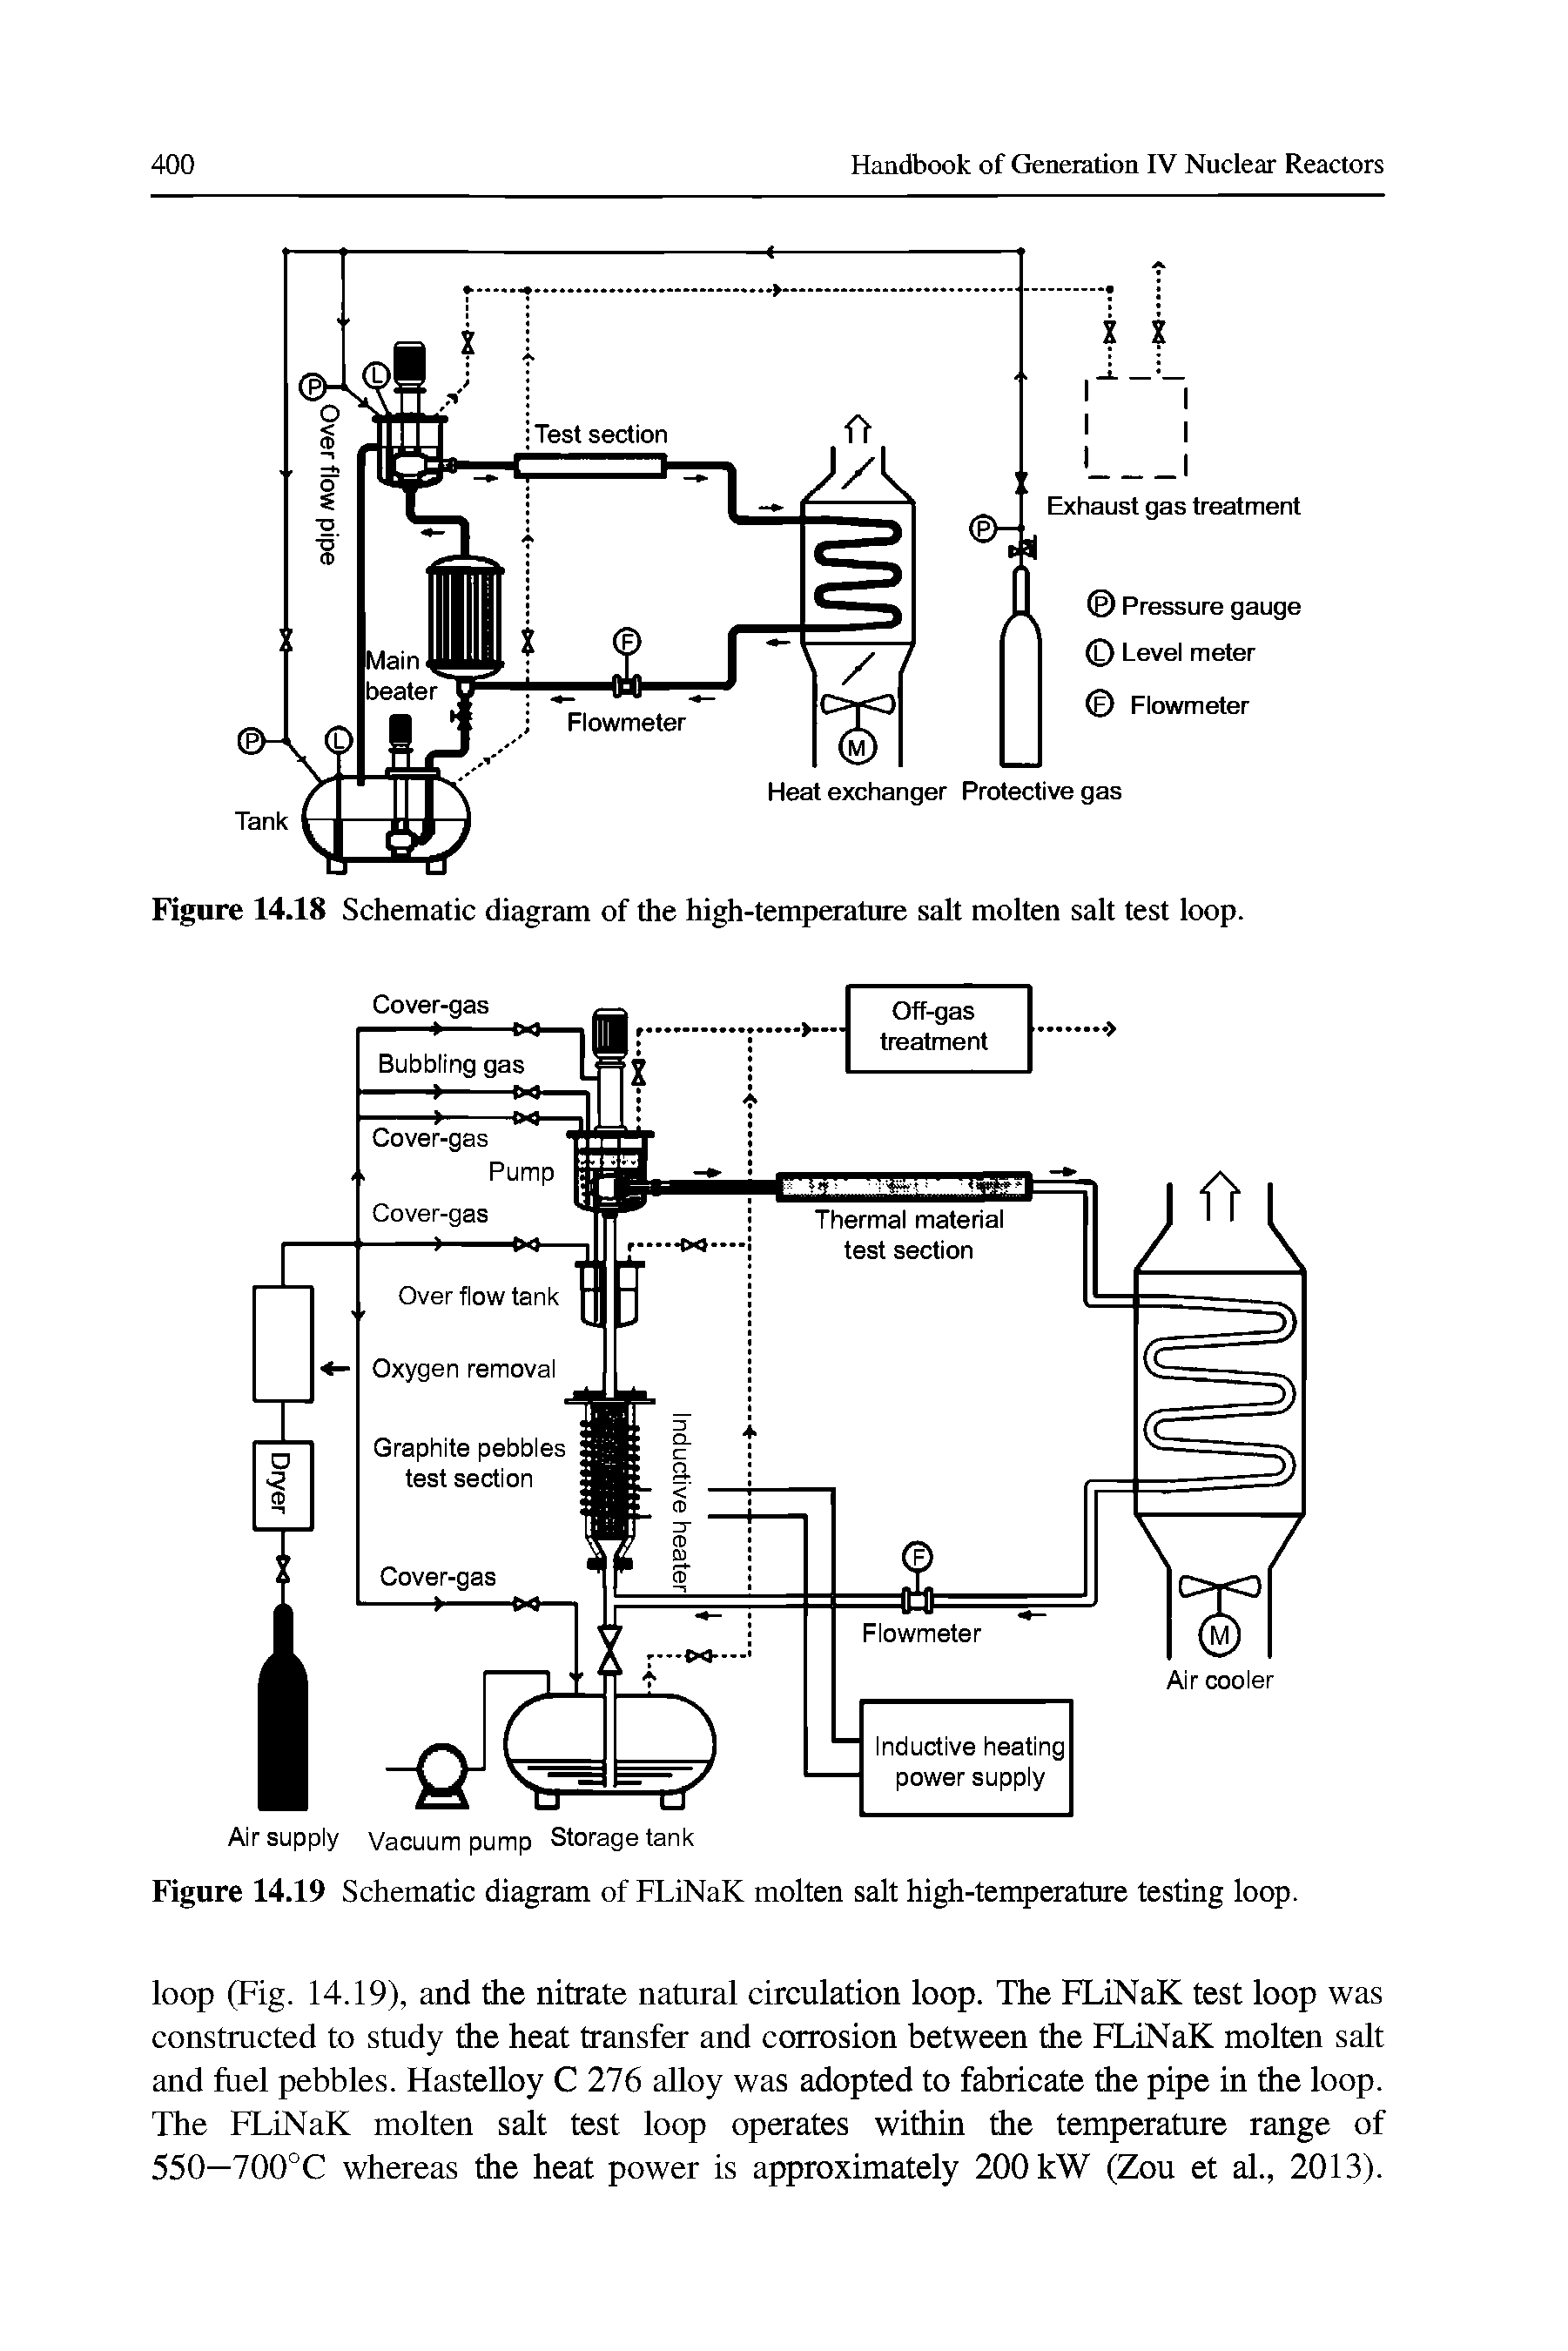 Figure 14.19 Schematic diagram of FLiNaK molten salt high-temperature testing loop.